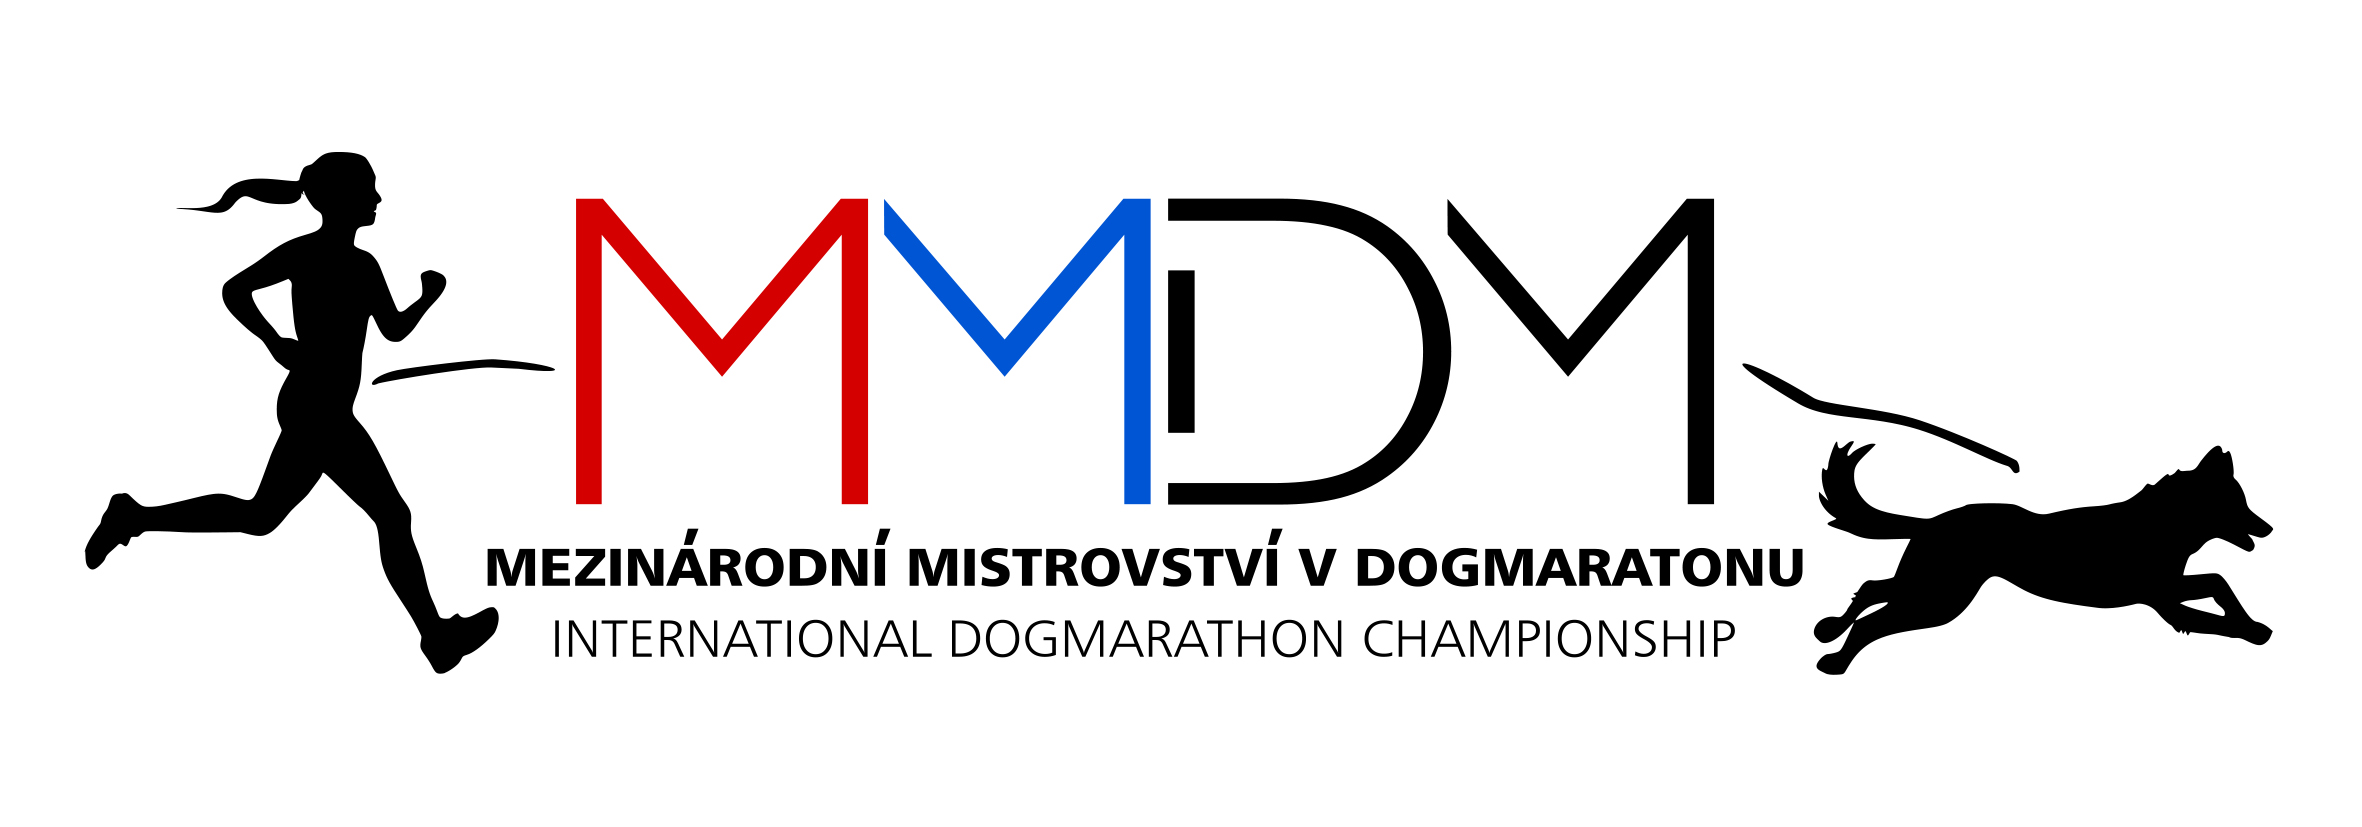 MMDM_logo_podelne2